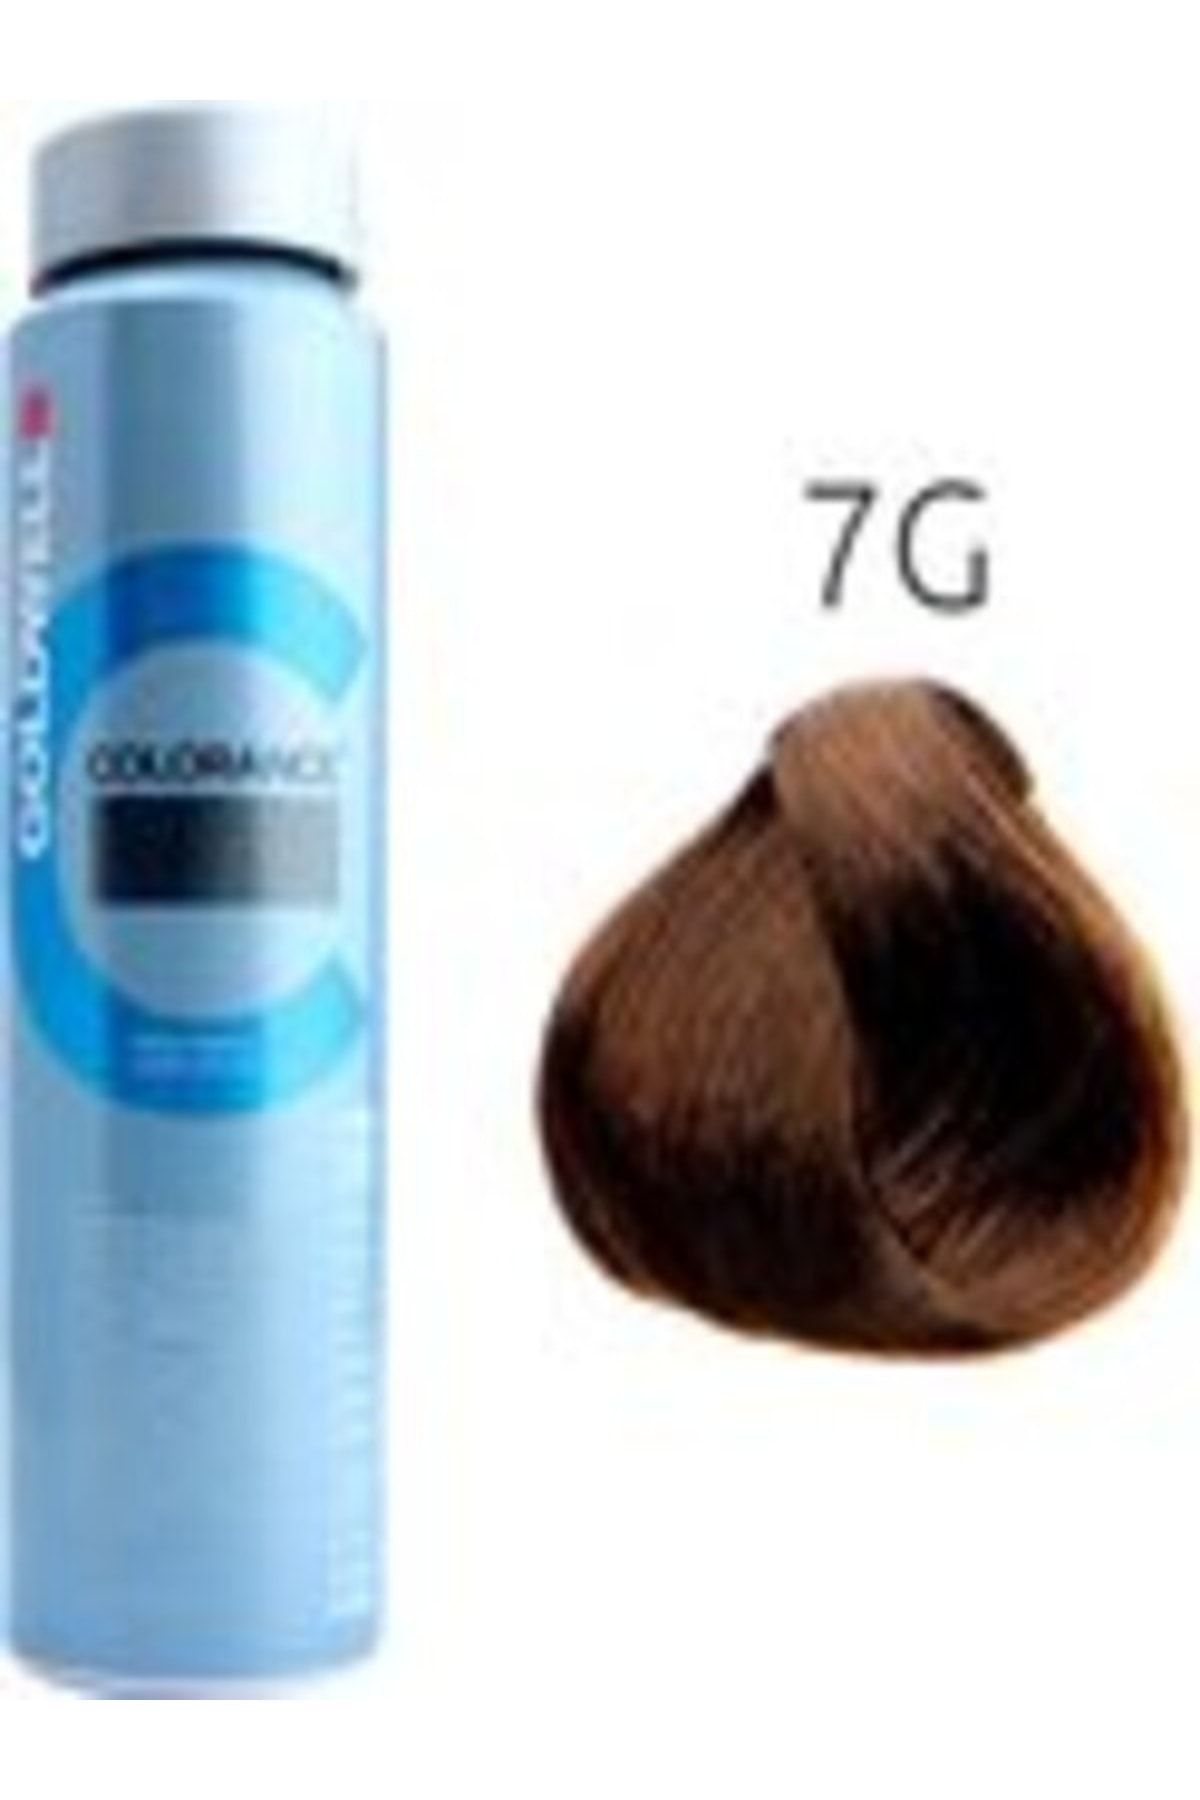 GOLDWELL Colorance 7g Uç Saç Boyası 125 ml / 4.2 Oz.